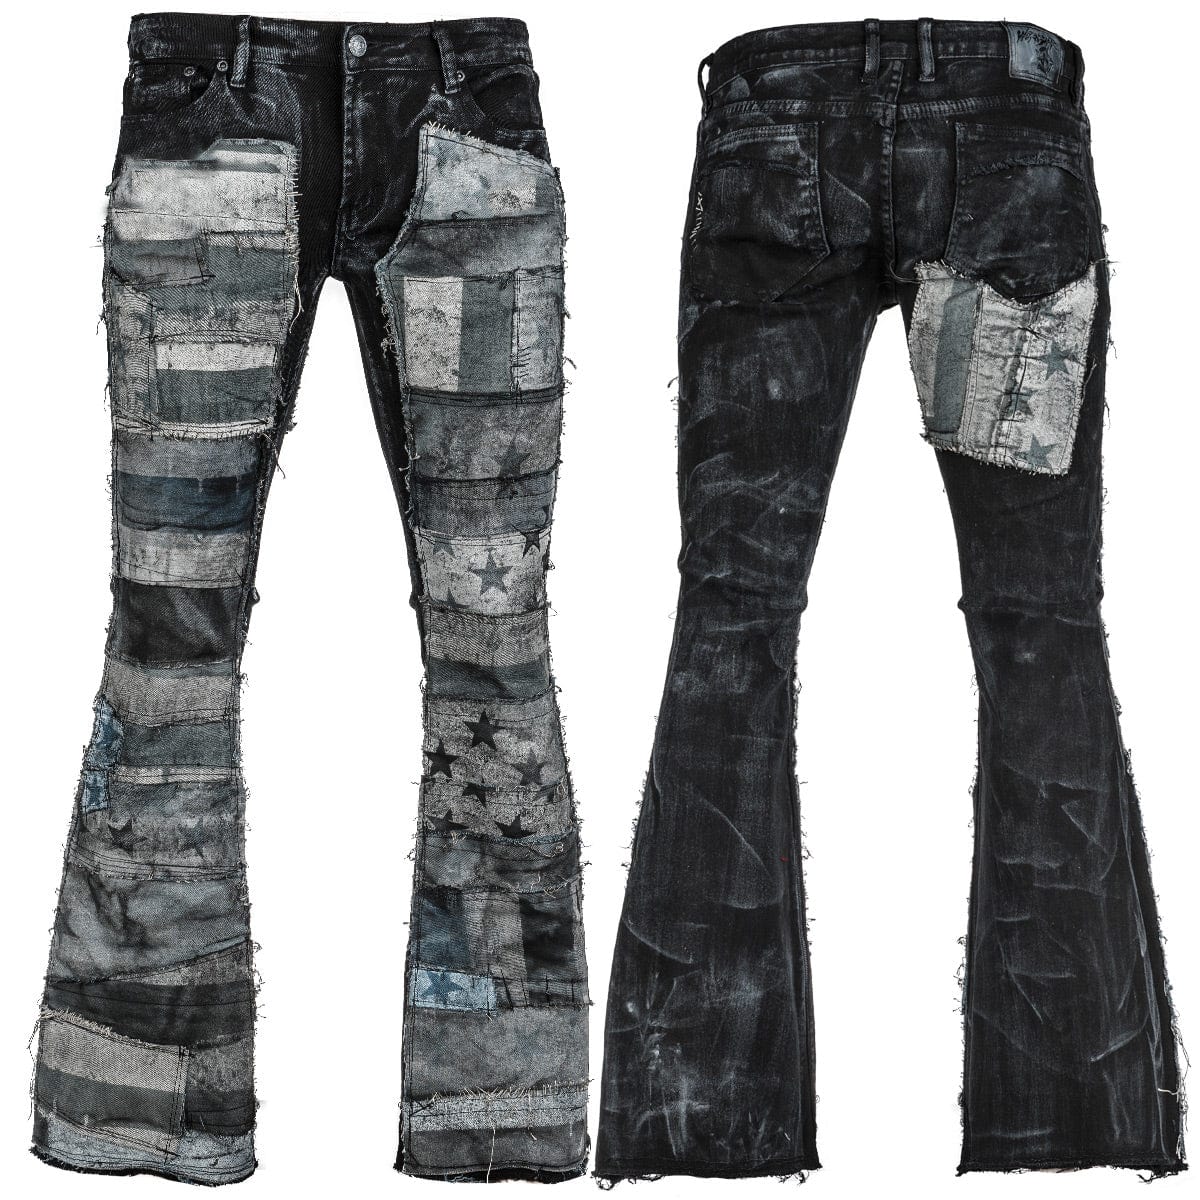 Custom Chop Shop Pants WornstarCustomJeans - ScarsandStripes - BlackWhiteBlue-Remnant.jpg